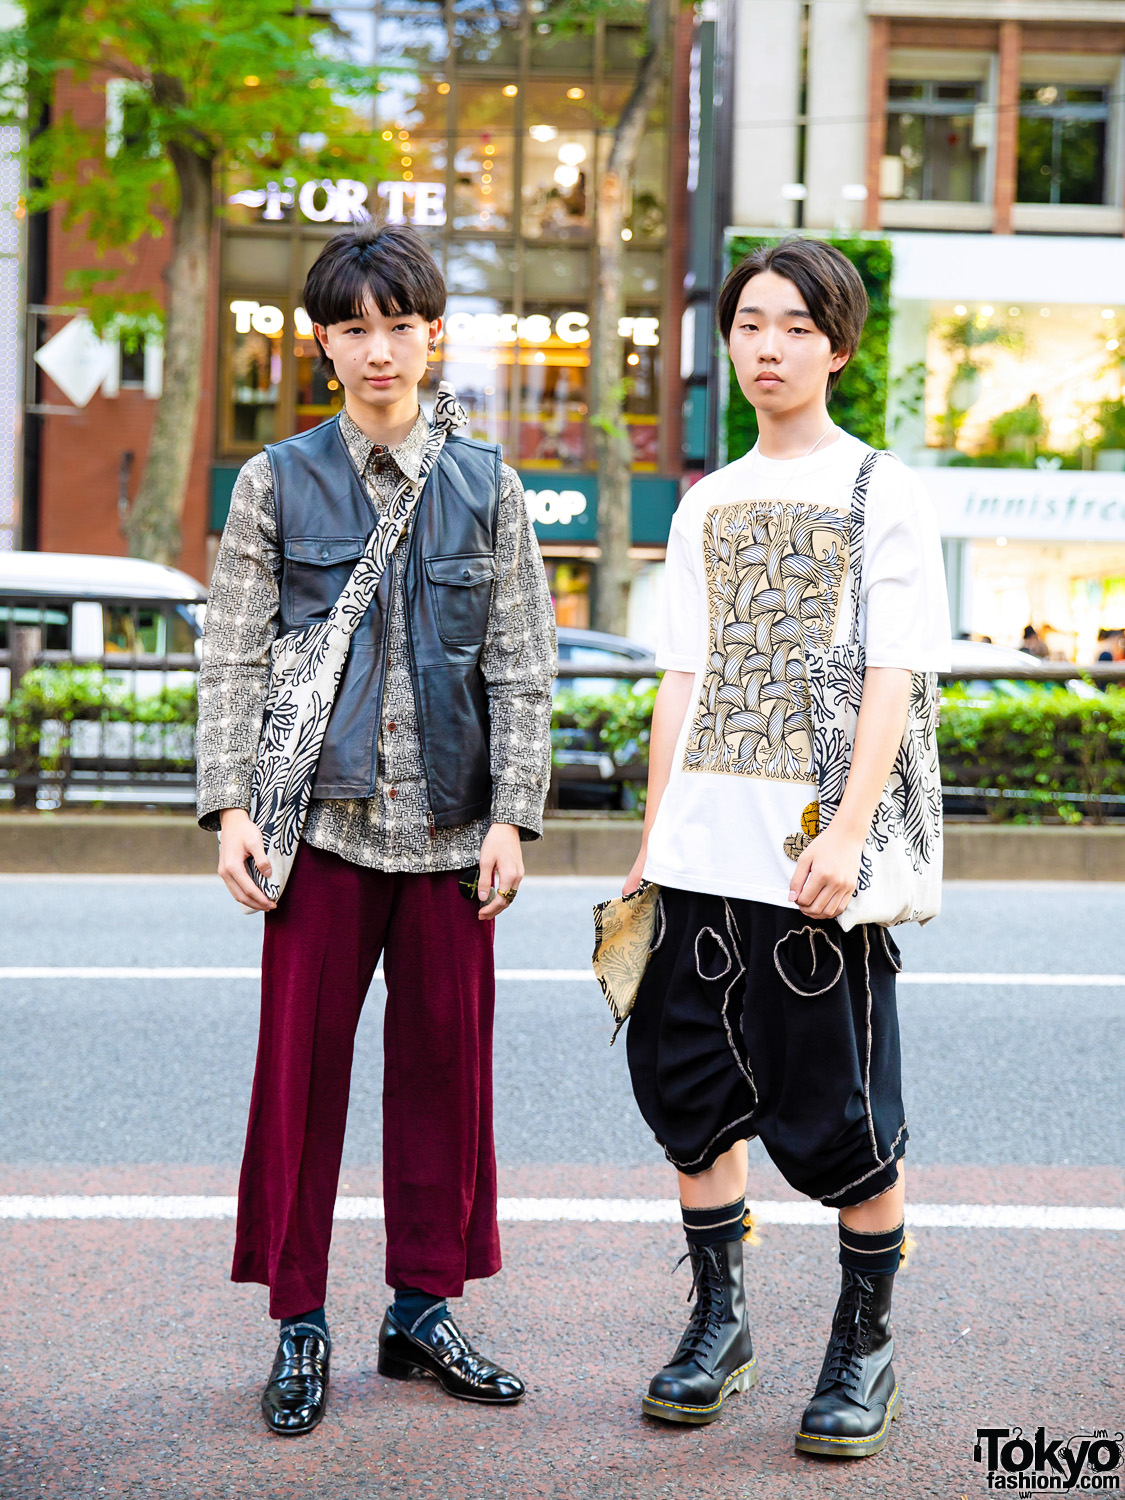 Christopher Nemeth Japanese Street Fashion – Tokyo Fashion